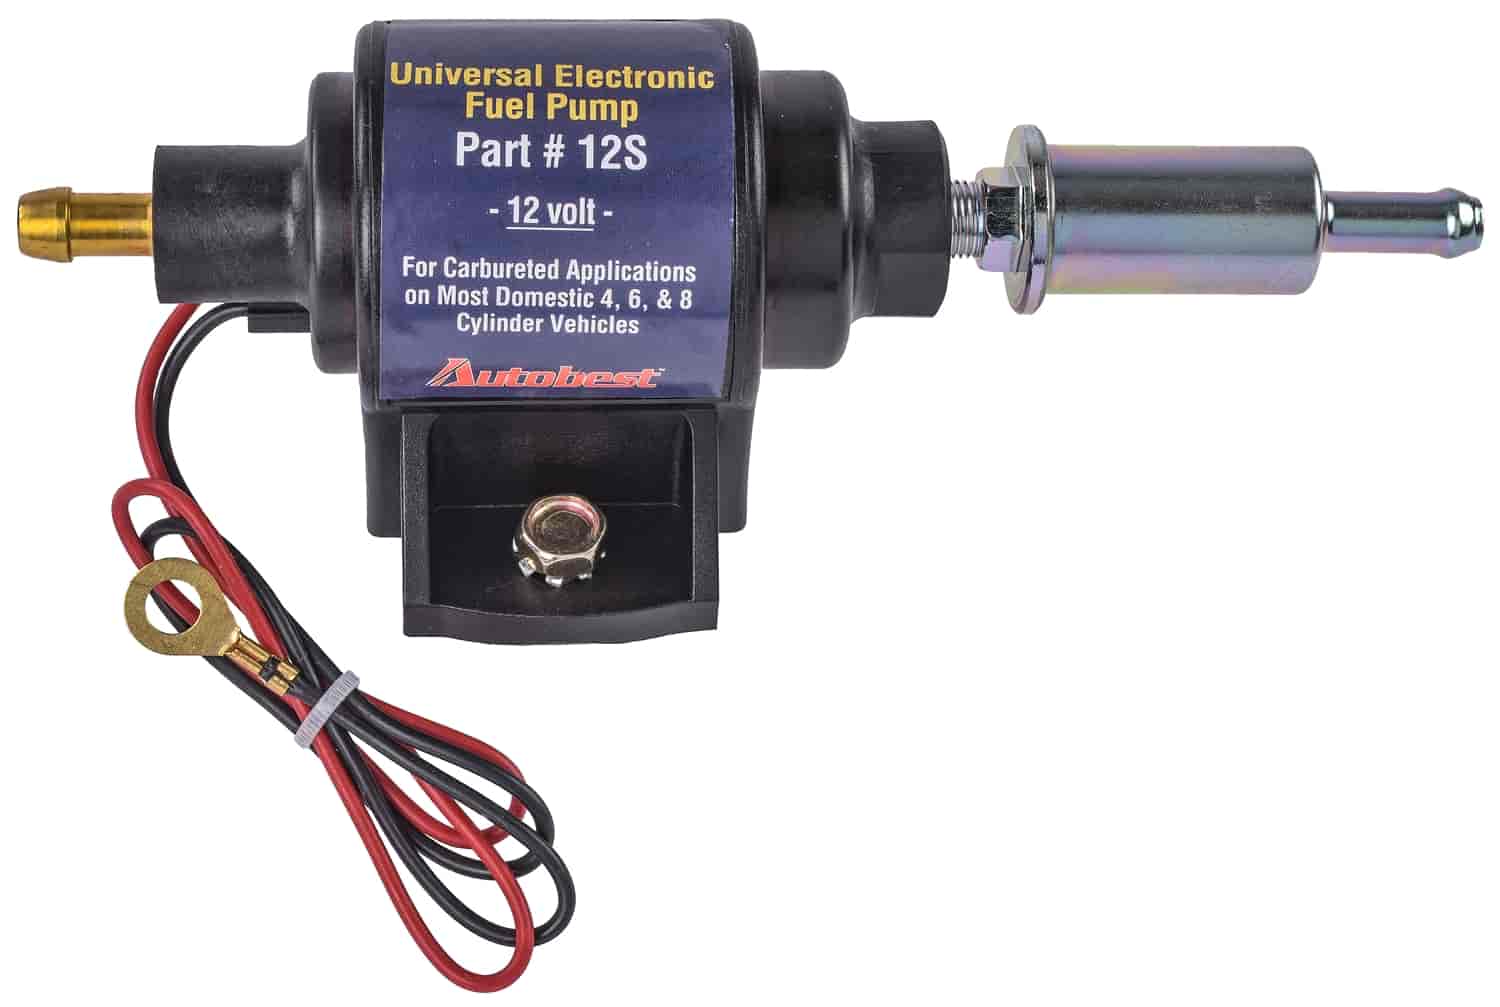 Universal Electric Fuel Pump 4-7 PSI